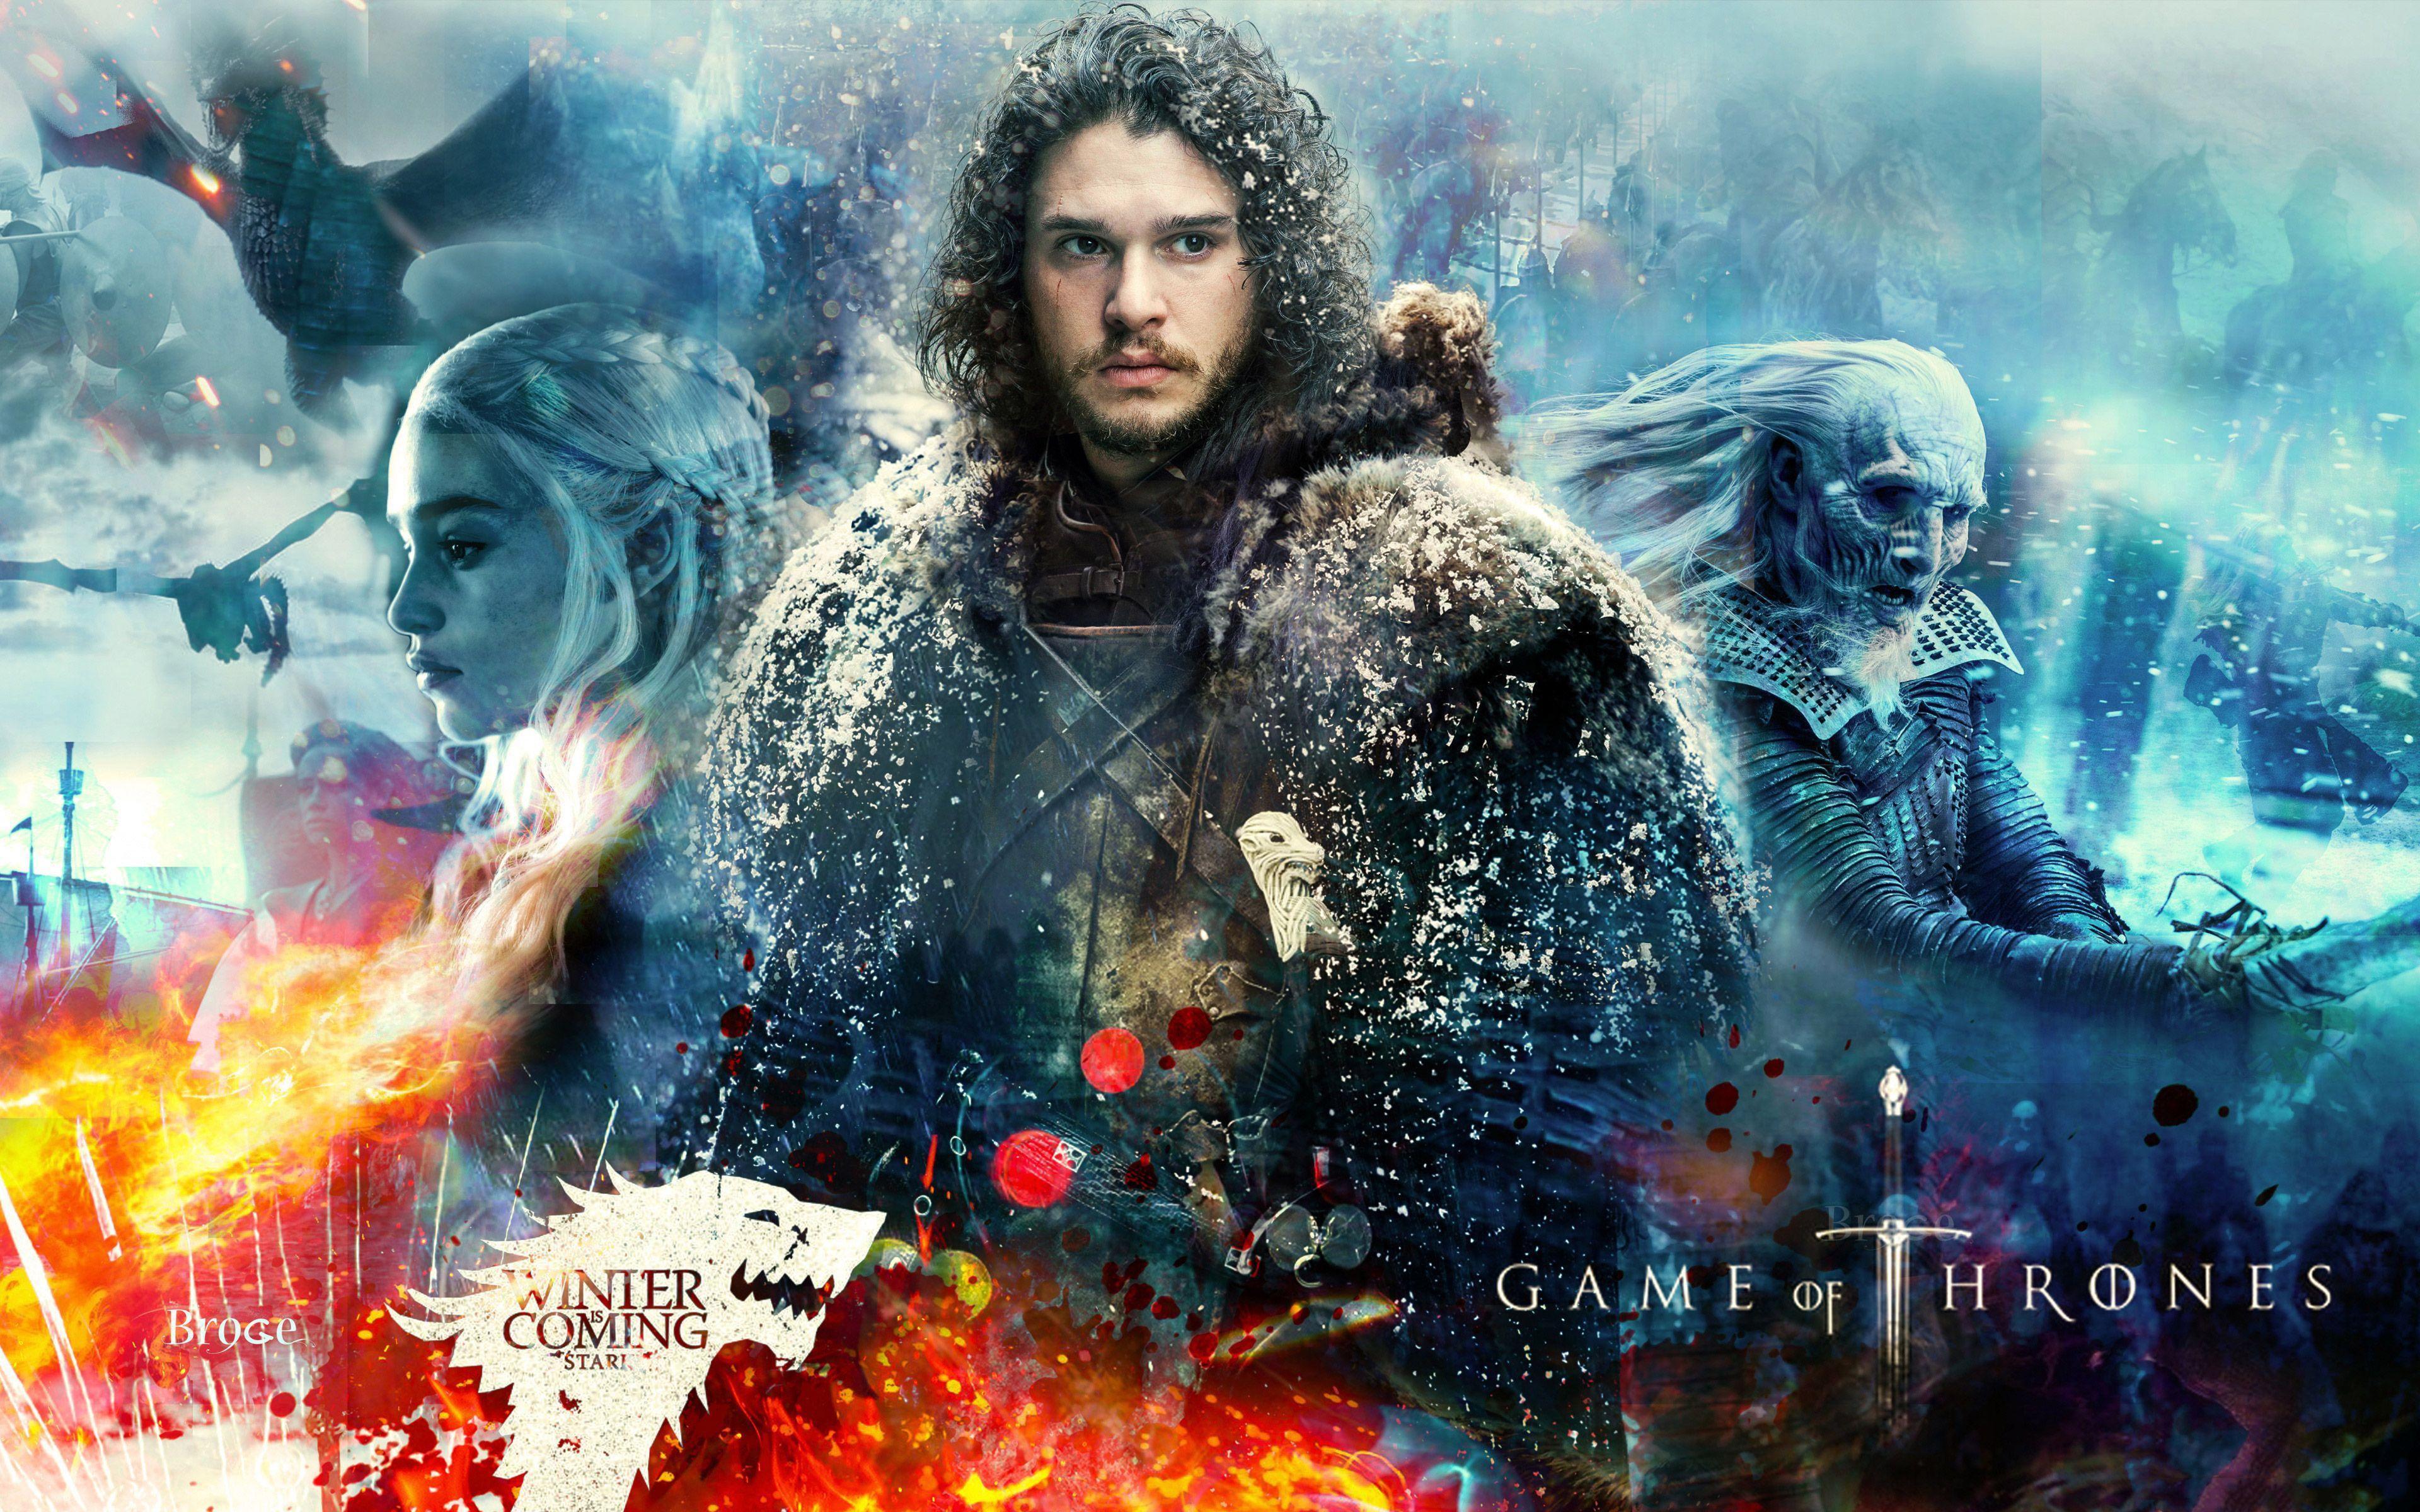 4K/HD Wallpaper Of Game Of Thrones Season 8 (+Season 7)